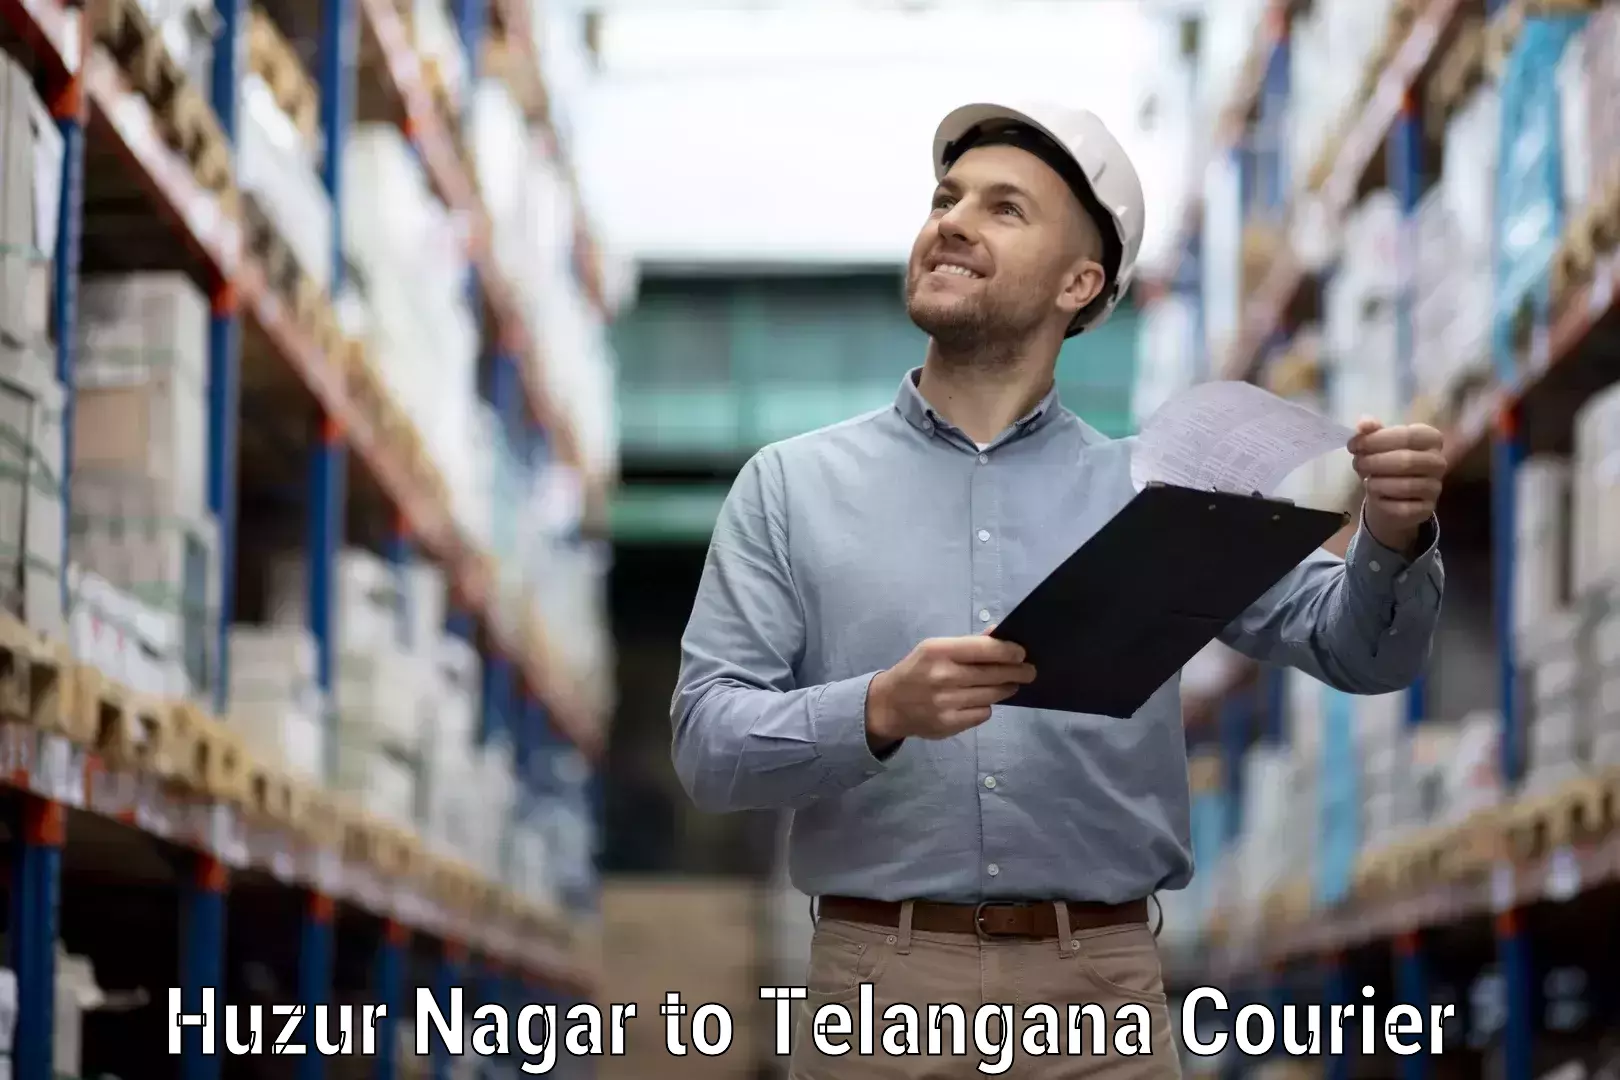 Courier app Huzur Nagar to Mancherial